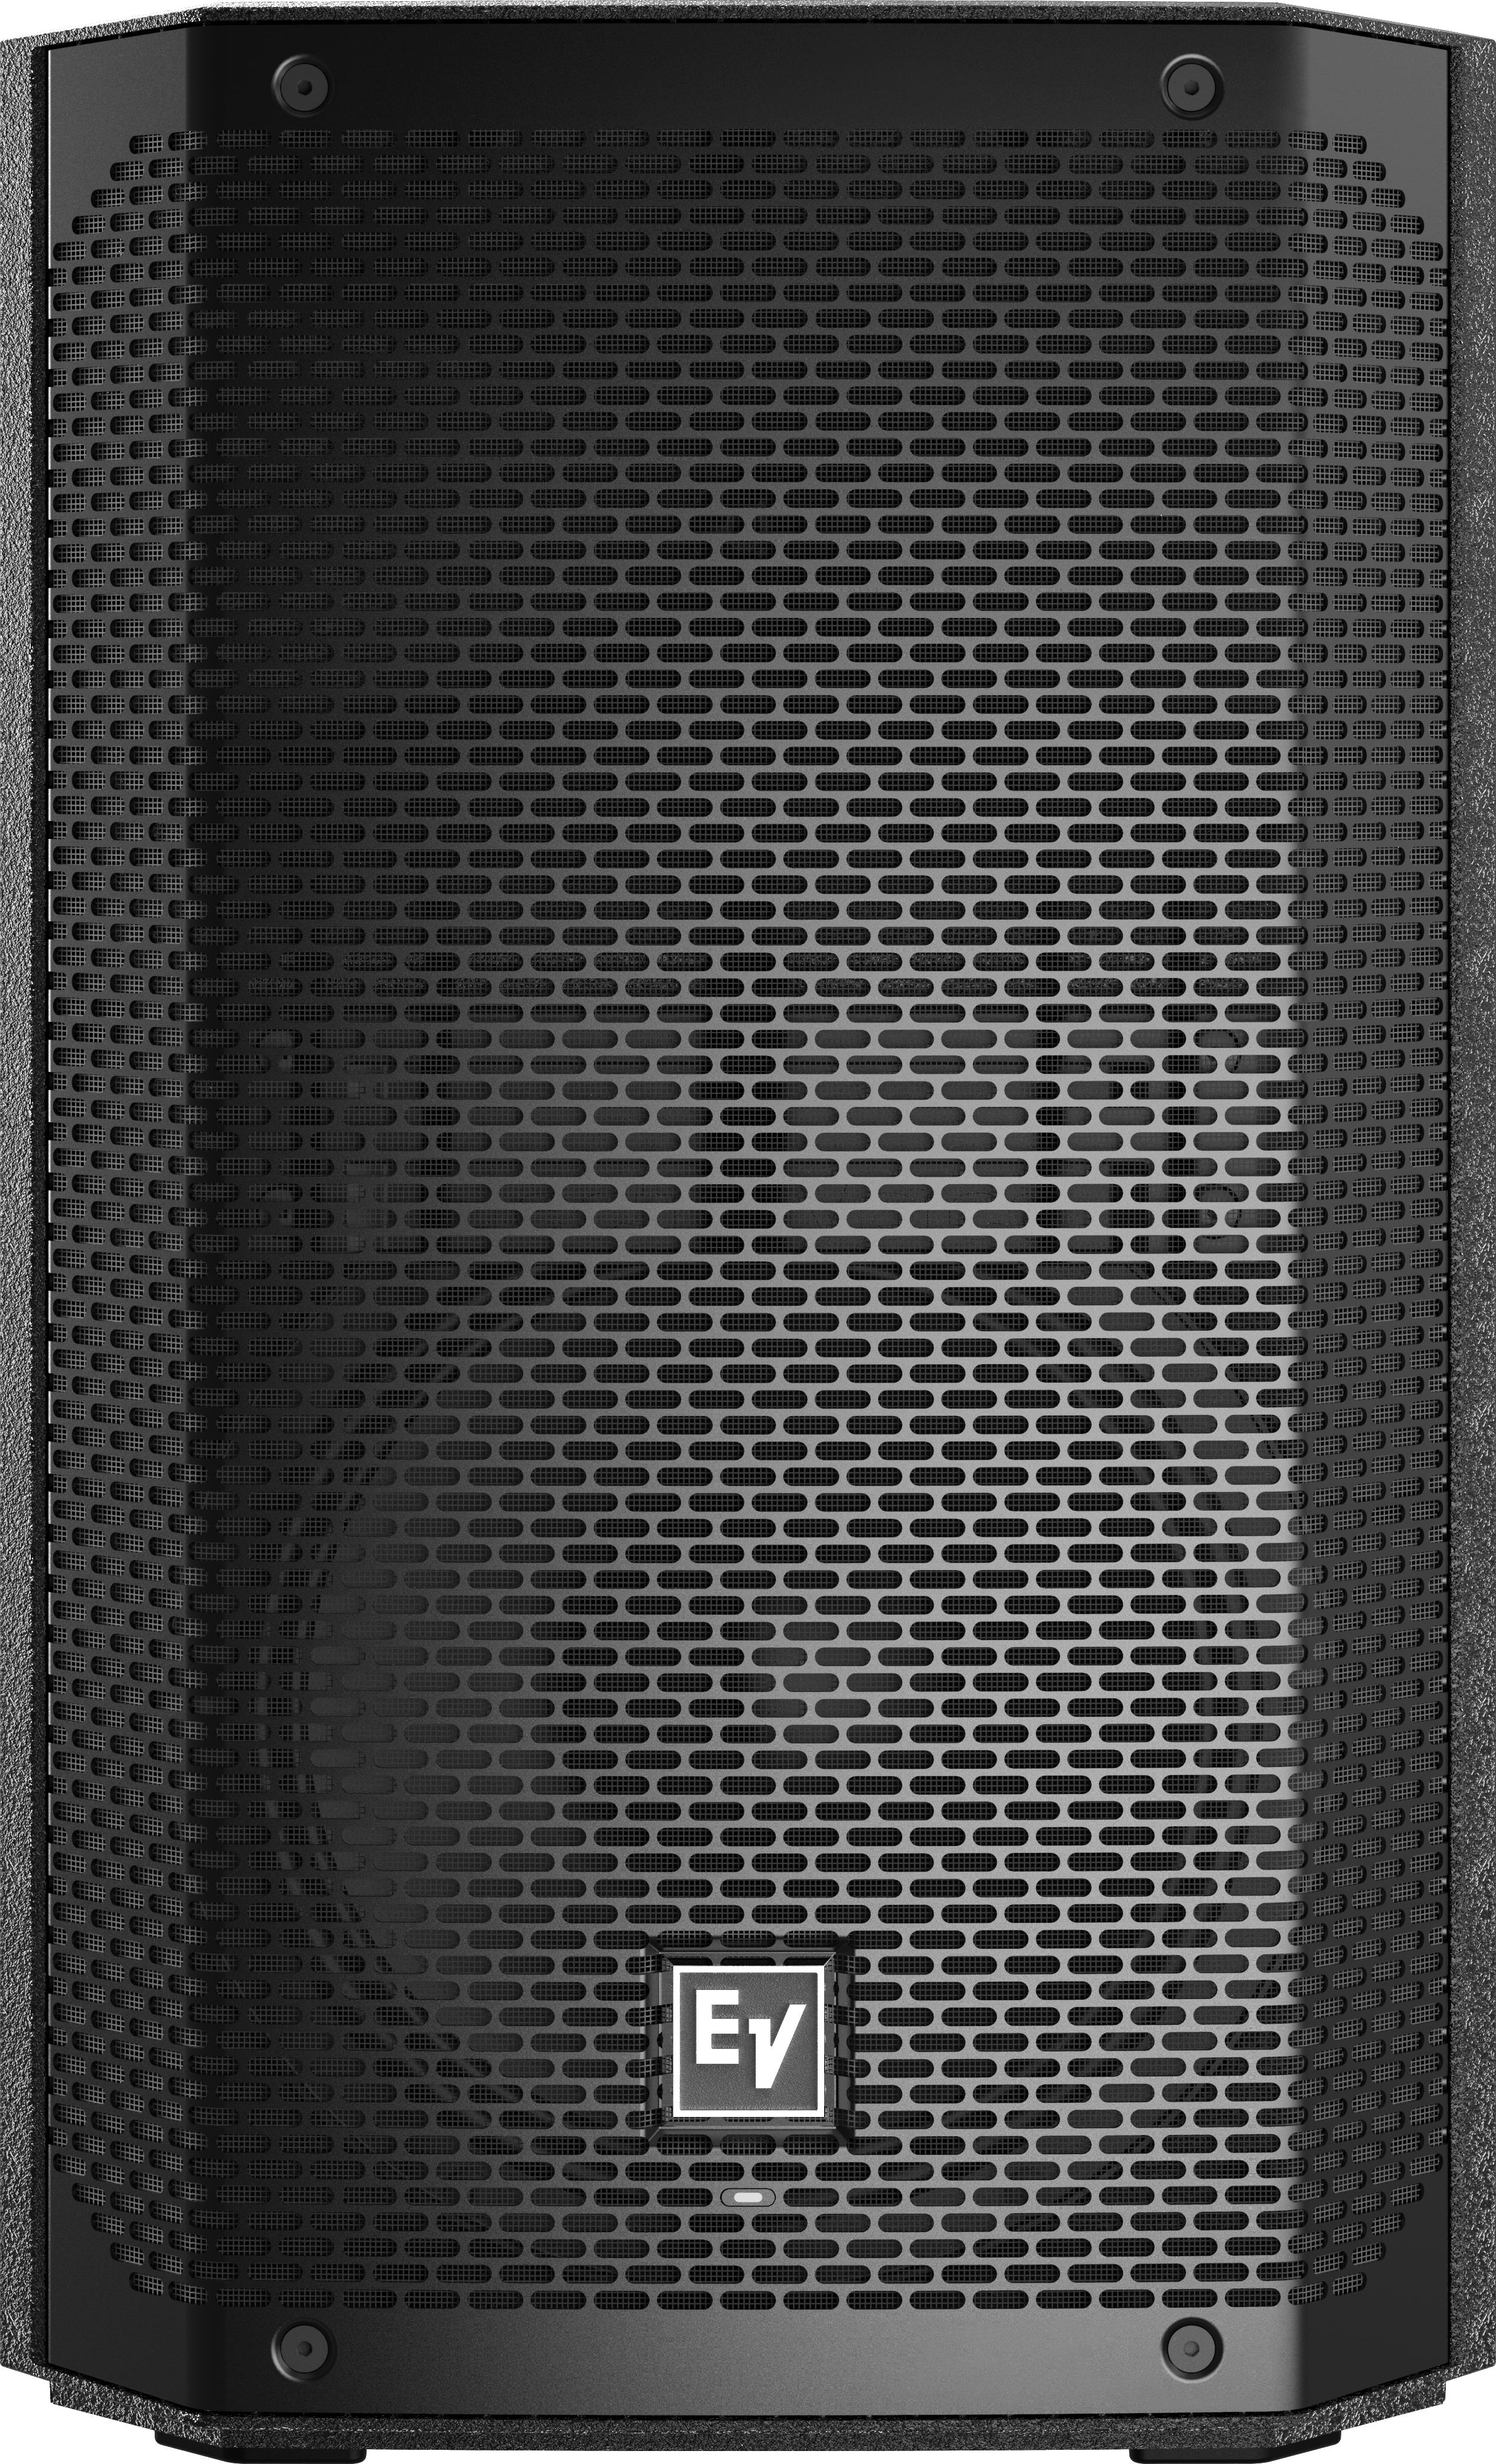 Electro-Voice ELX200-10P акуст. система 2-полос., активная, 10``, макс. SPL 130 дБ (пик), 1200W, с D купить в prostore.me